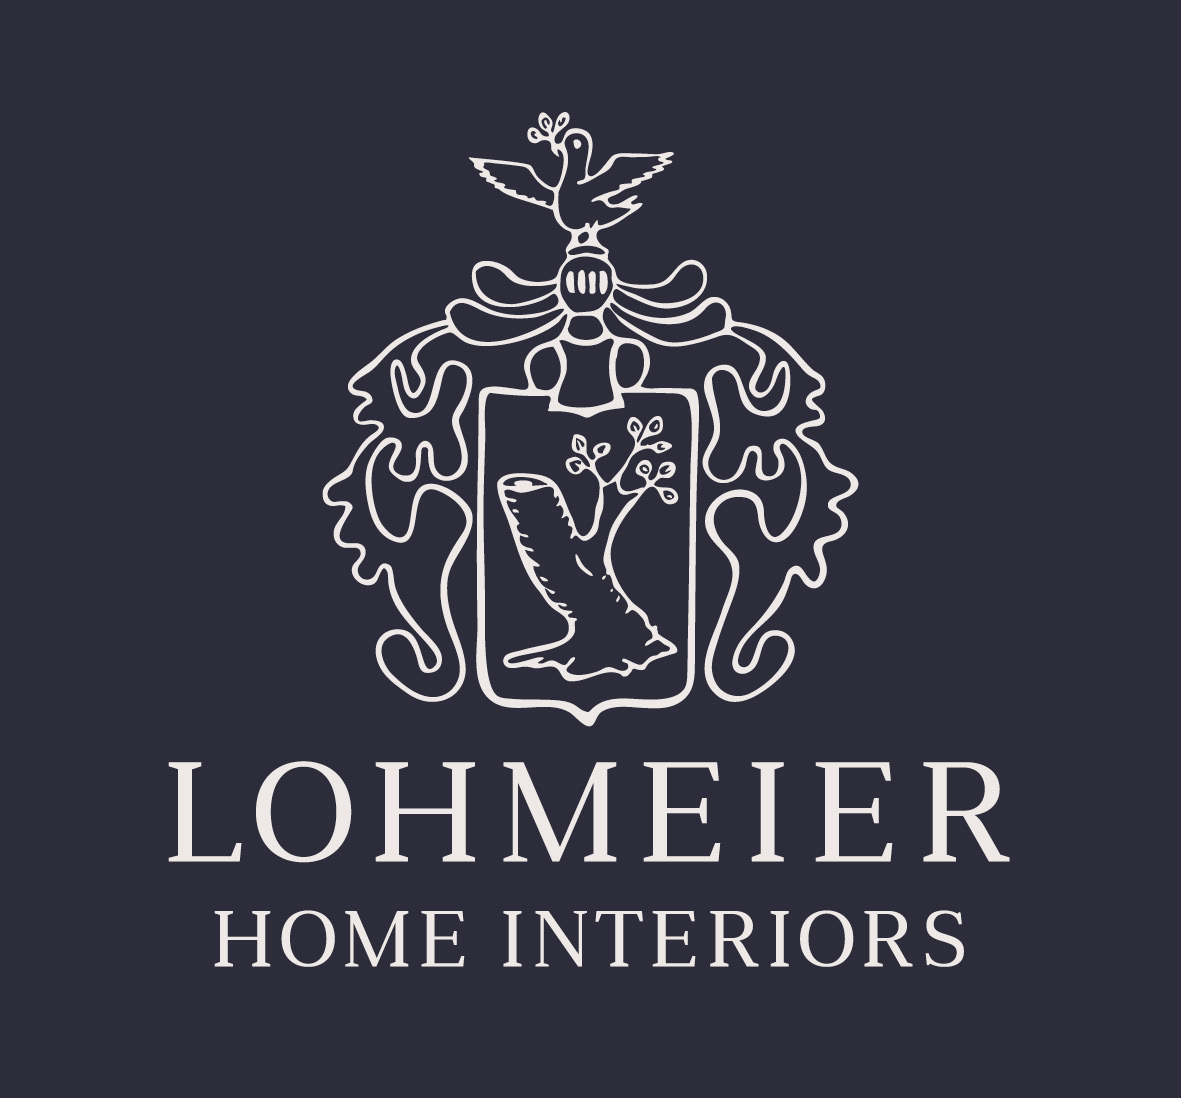 Lohmeier Home Interiors